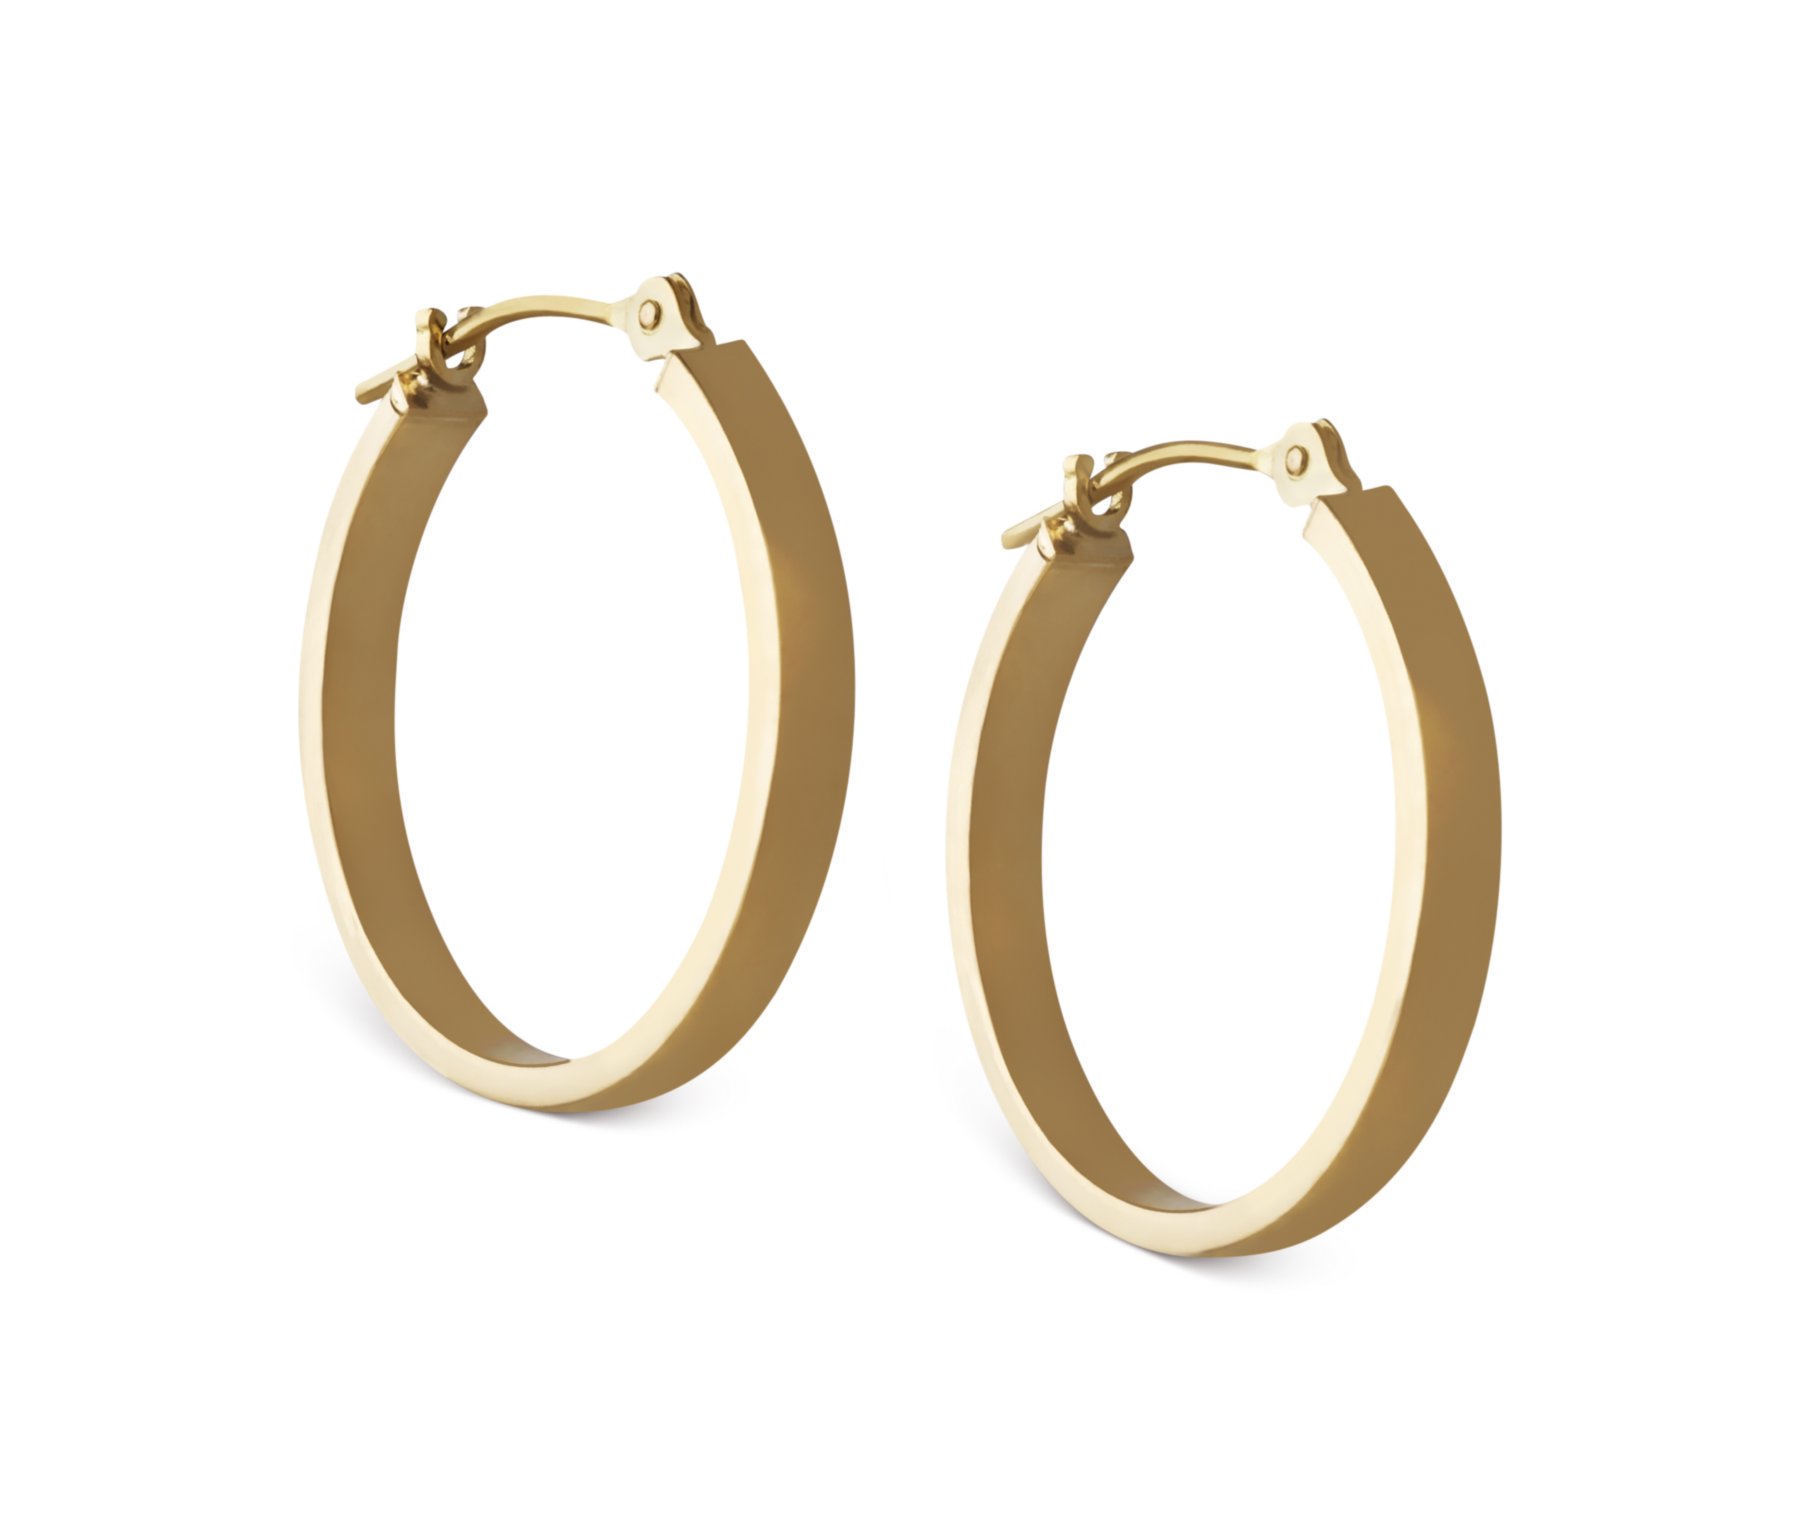 18K Gold Earrings, Polished Square Edge Hoop Earrings